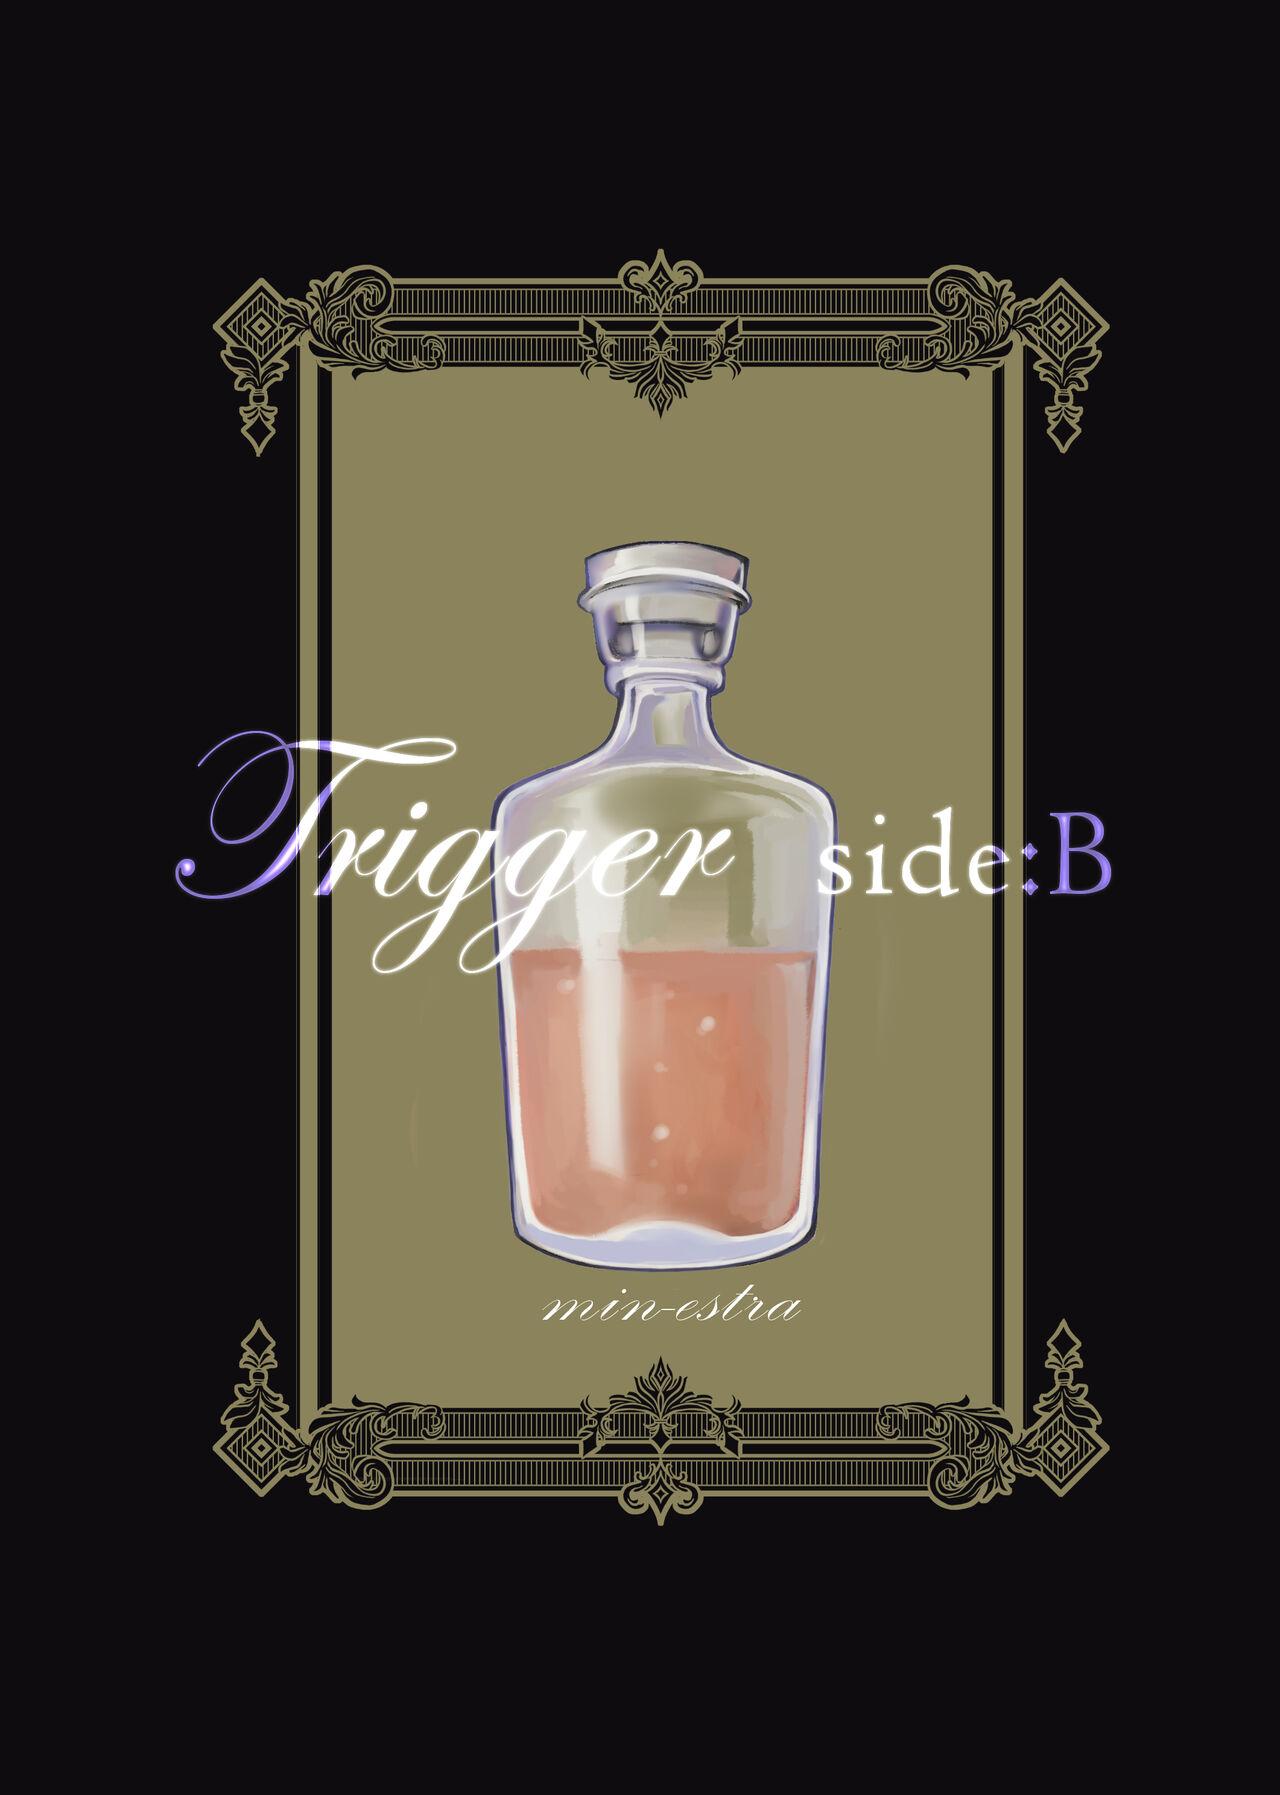 Trigger side:B【R18】 0